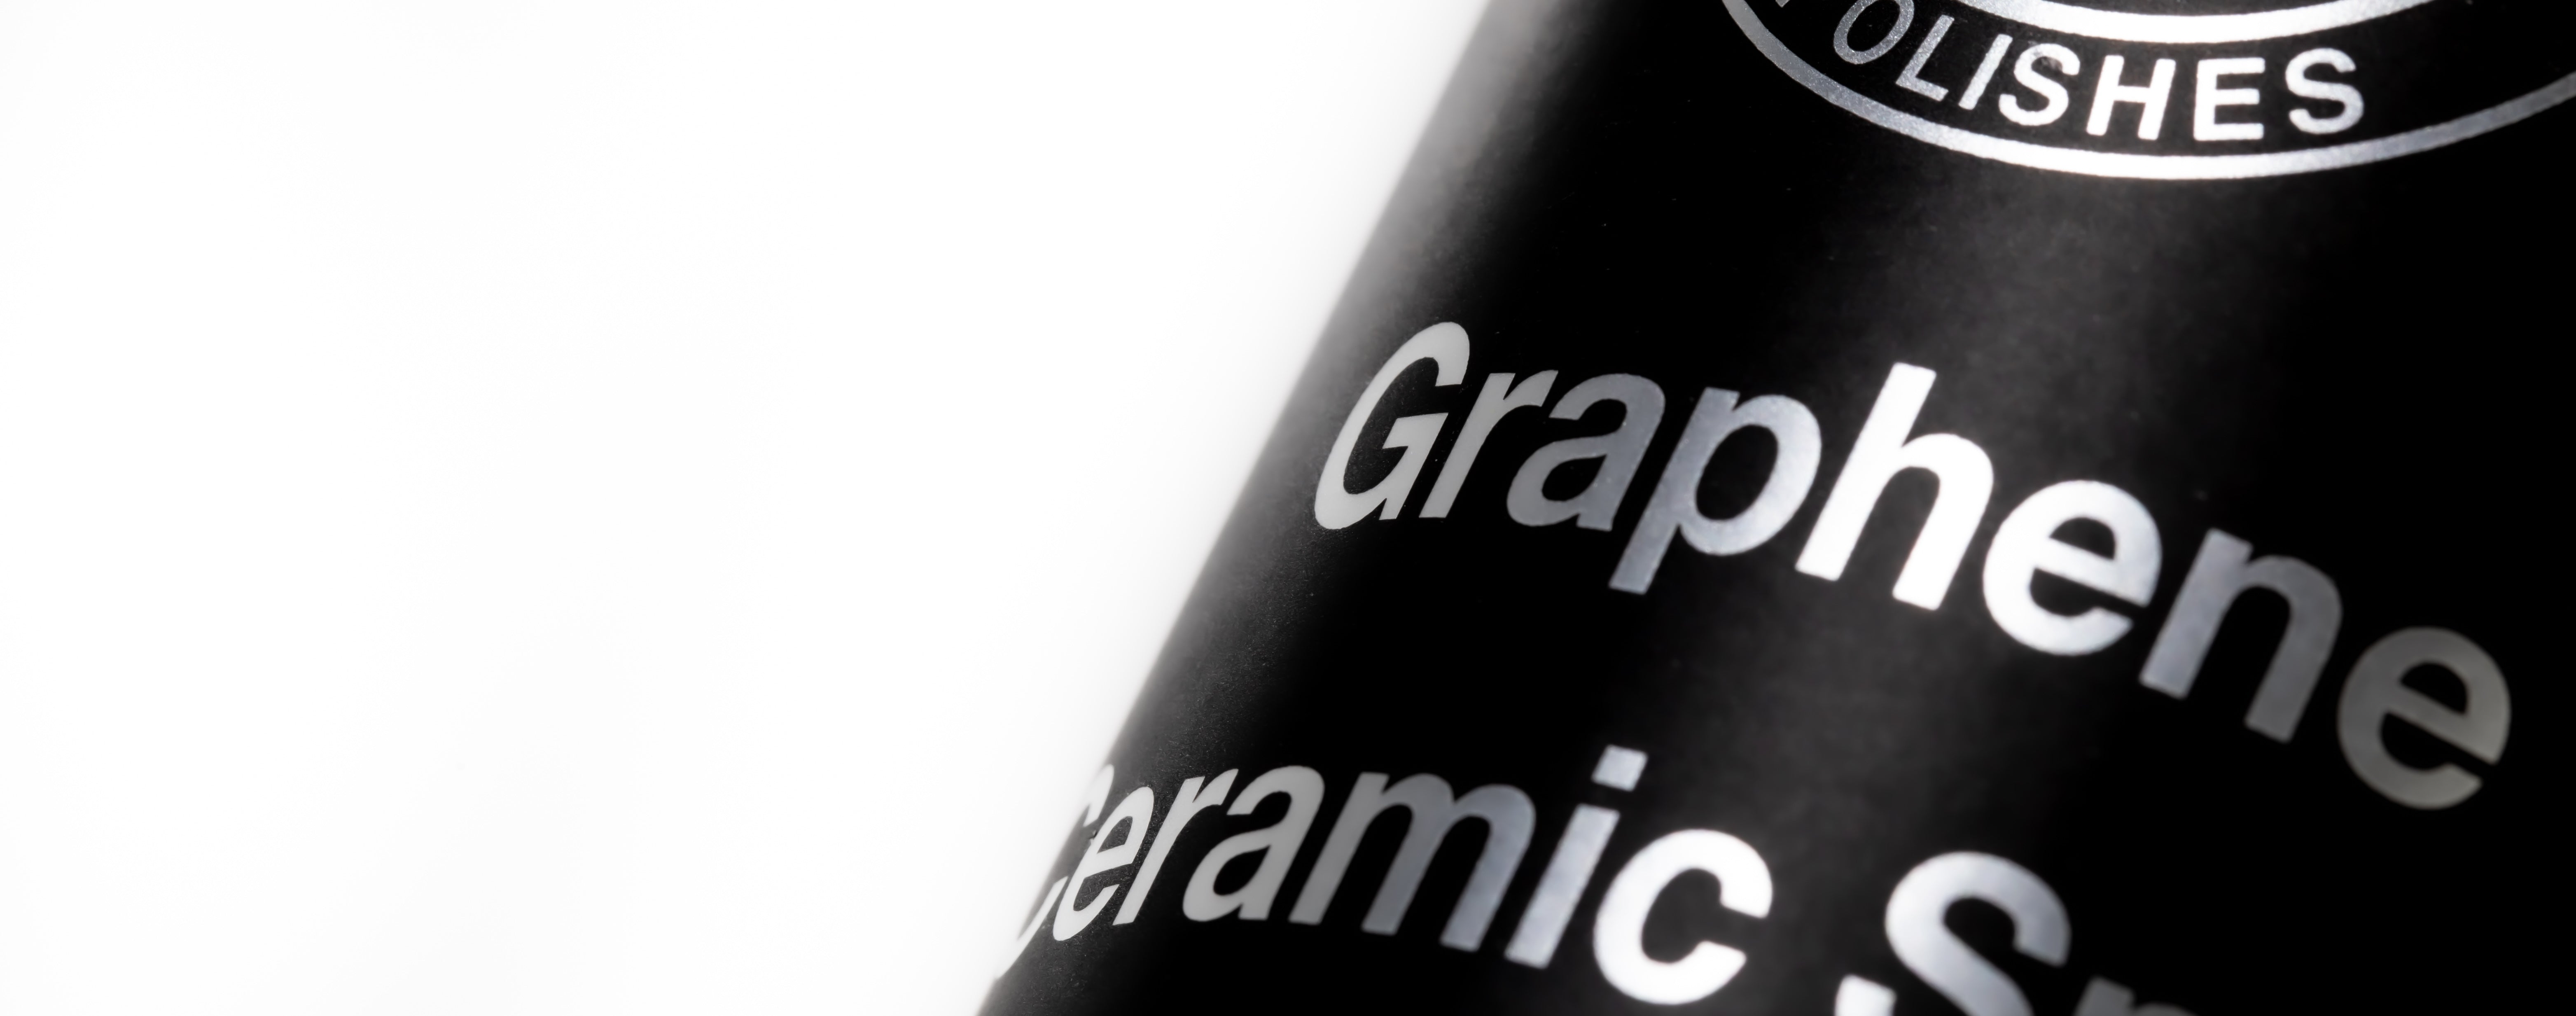 Adams Adamâ S 10H Graphene Ceramic Coating Complete Kit - 1+ Years of Protection Graphene Coating Spray